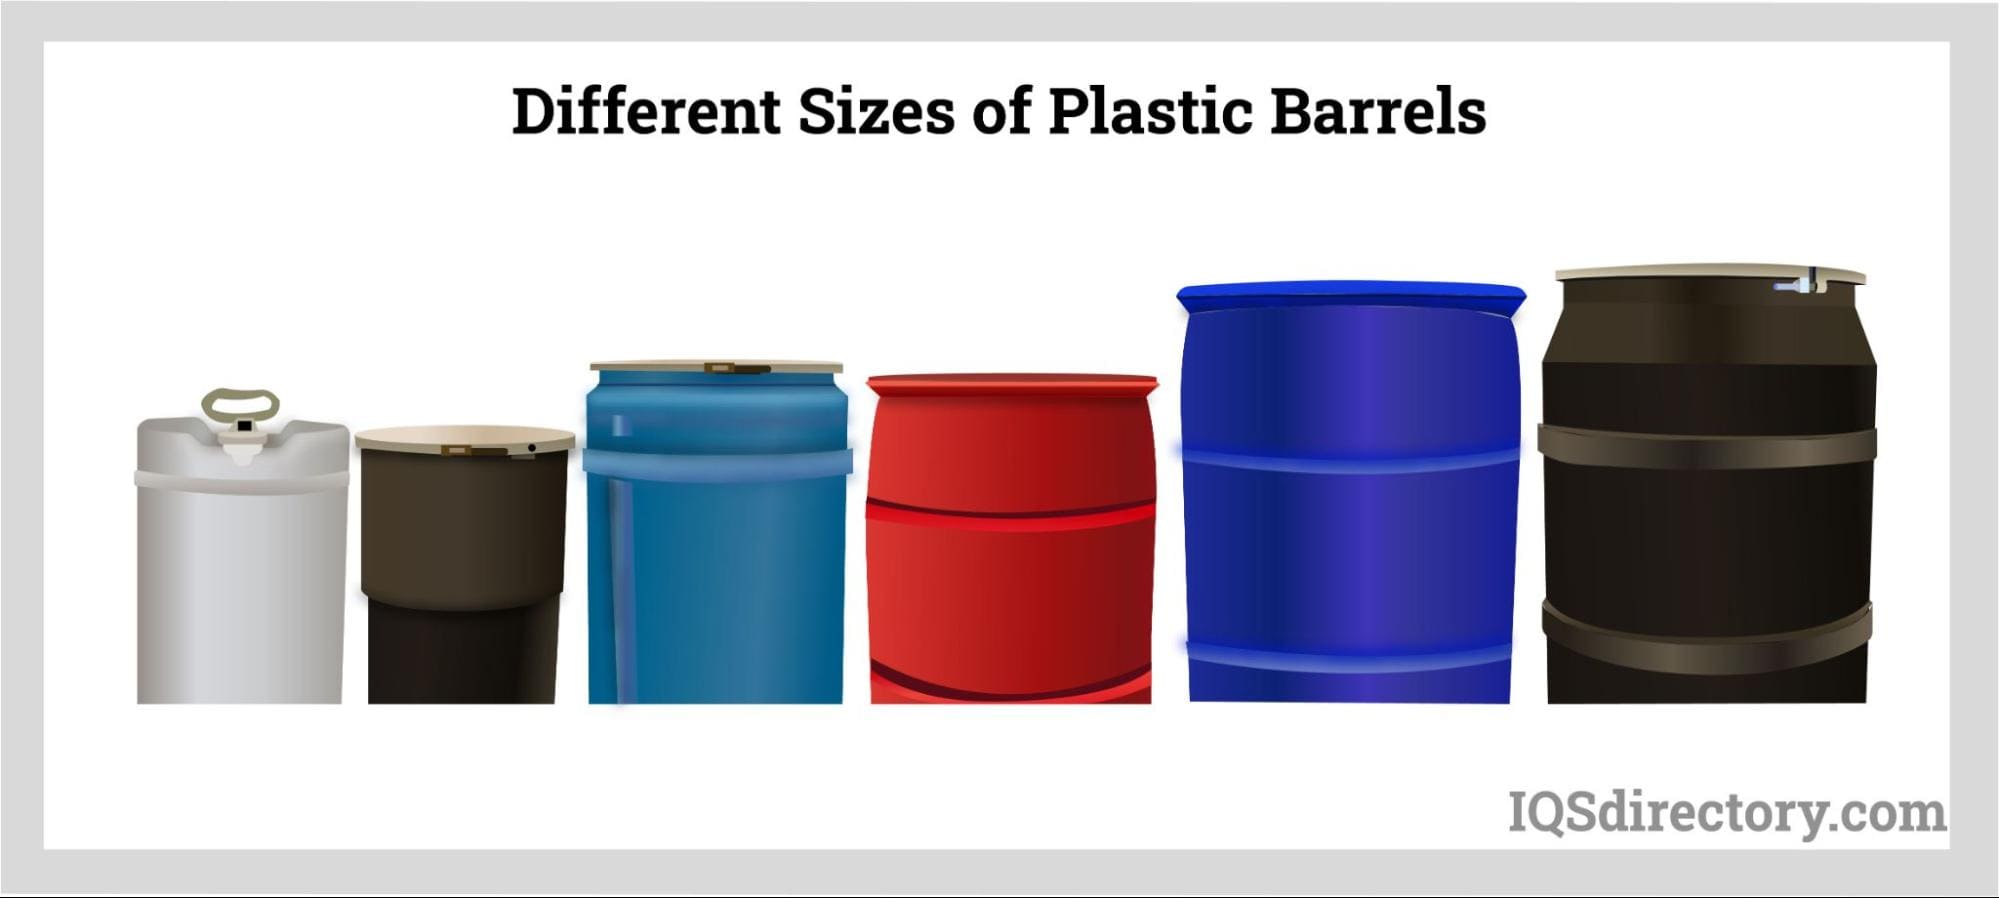 Different Sizes of Plastic Barrels